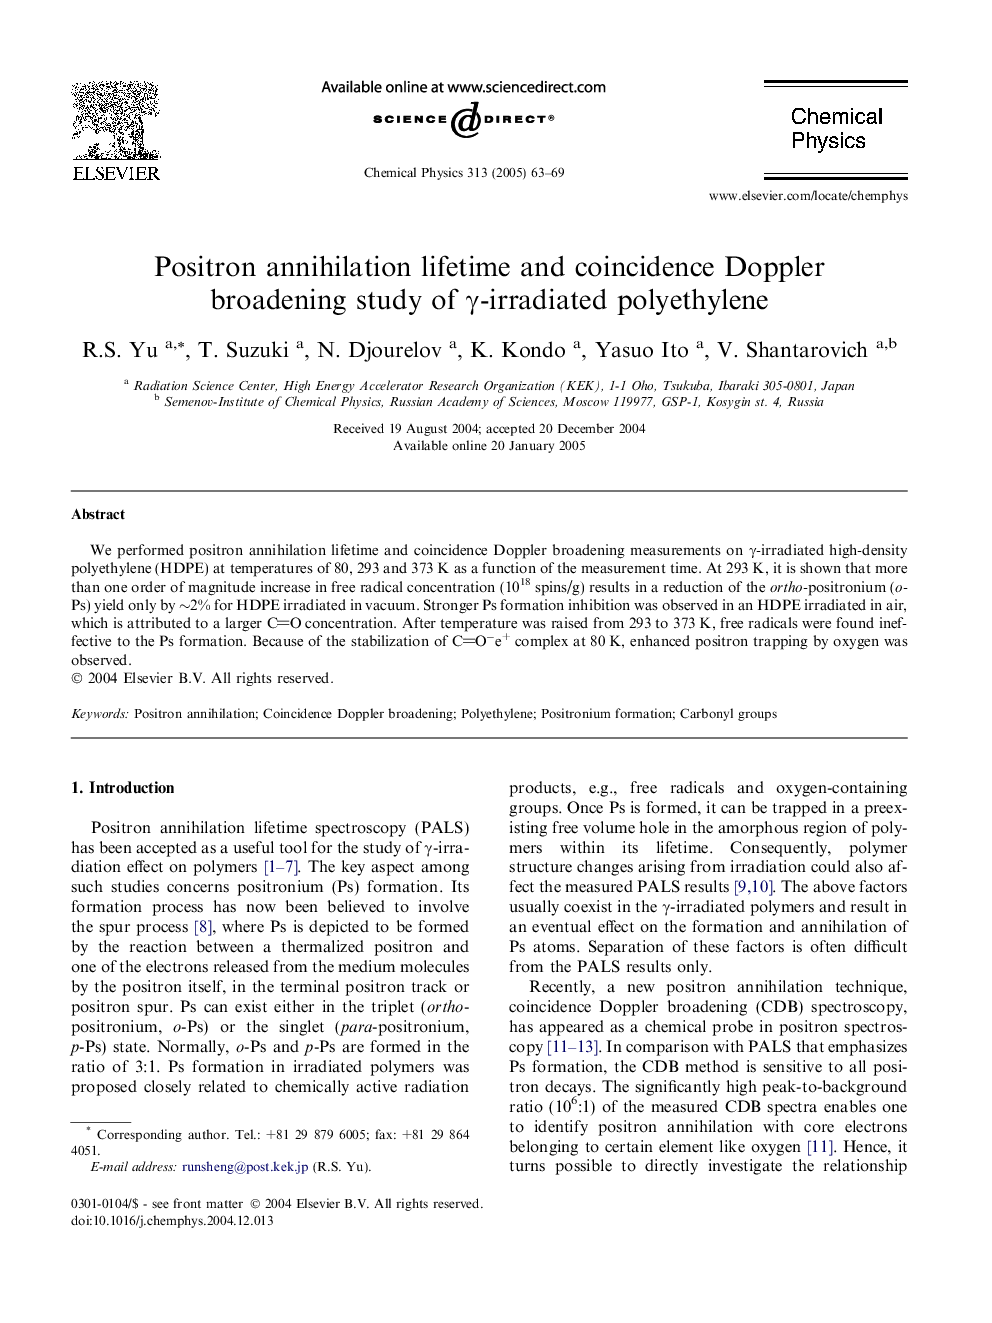 Positron annihilation lifetime and coincidence Doppler broadening study of Î³-irradiated polyethylene